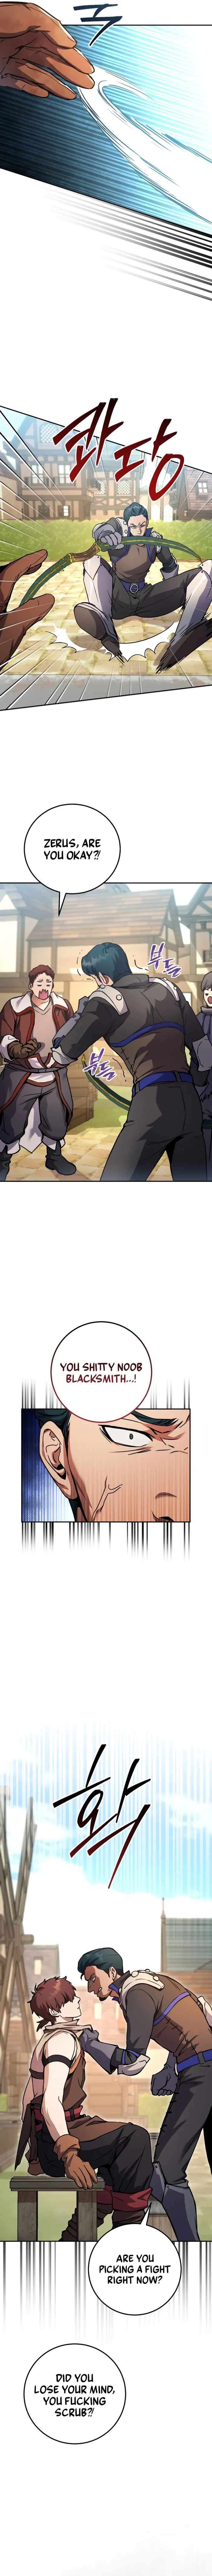 Legendary Blacksmith’s Vengeance Chapter 4 page 15